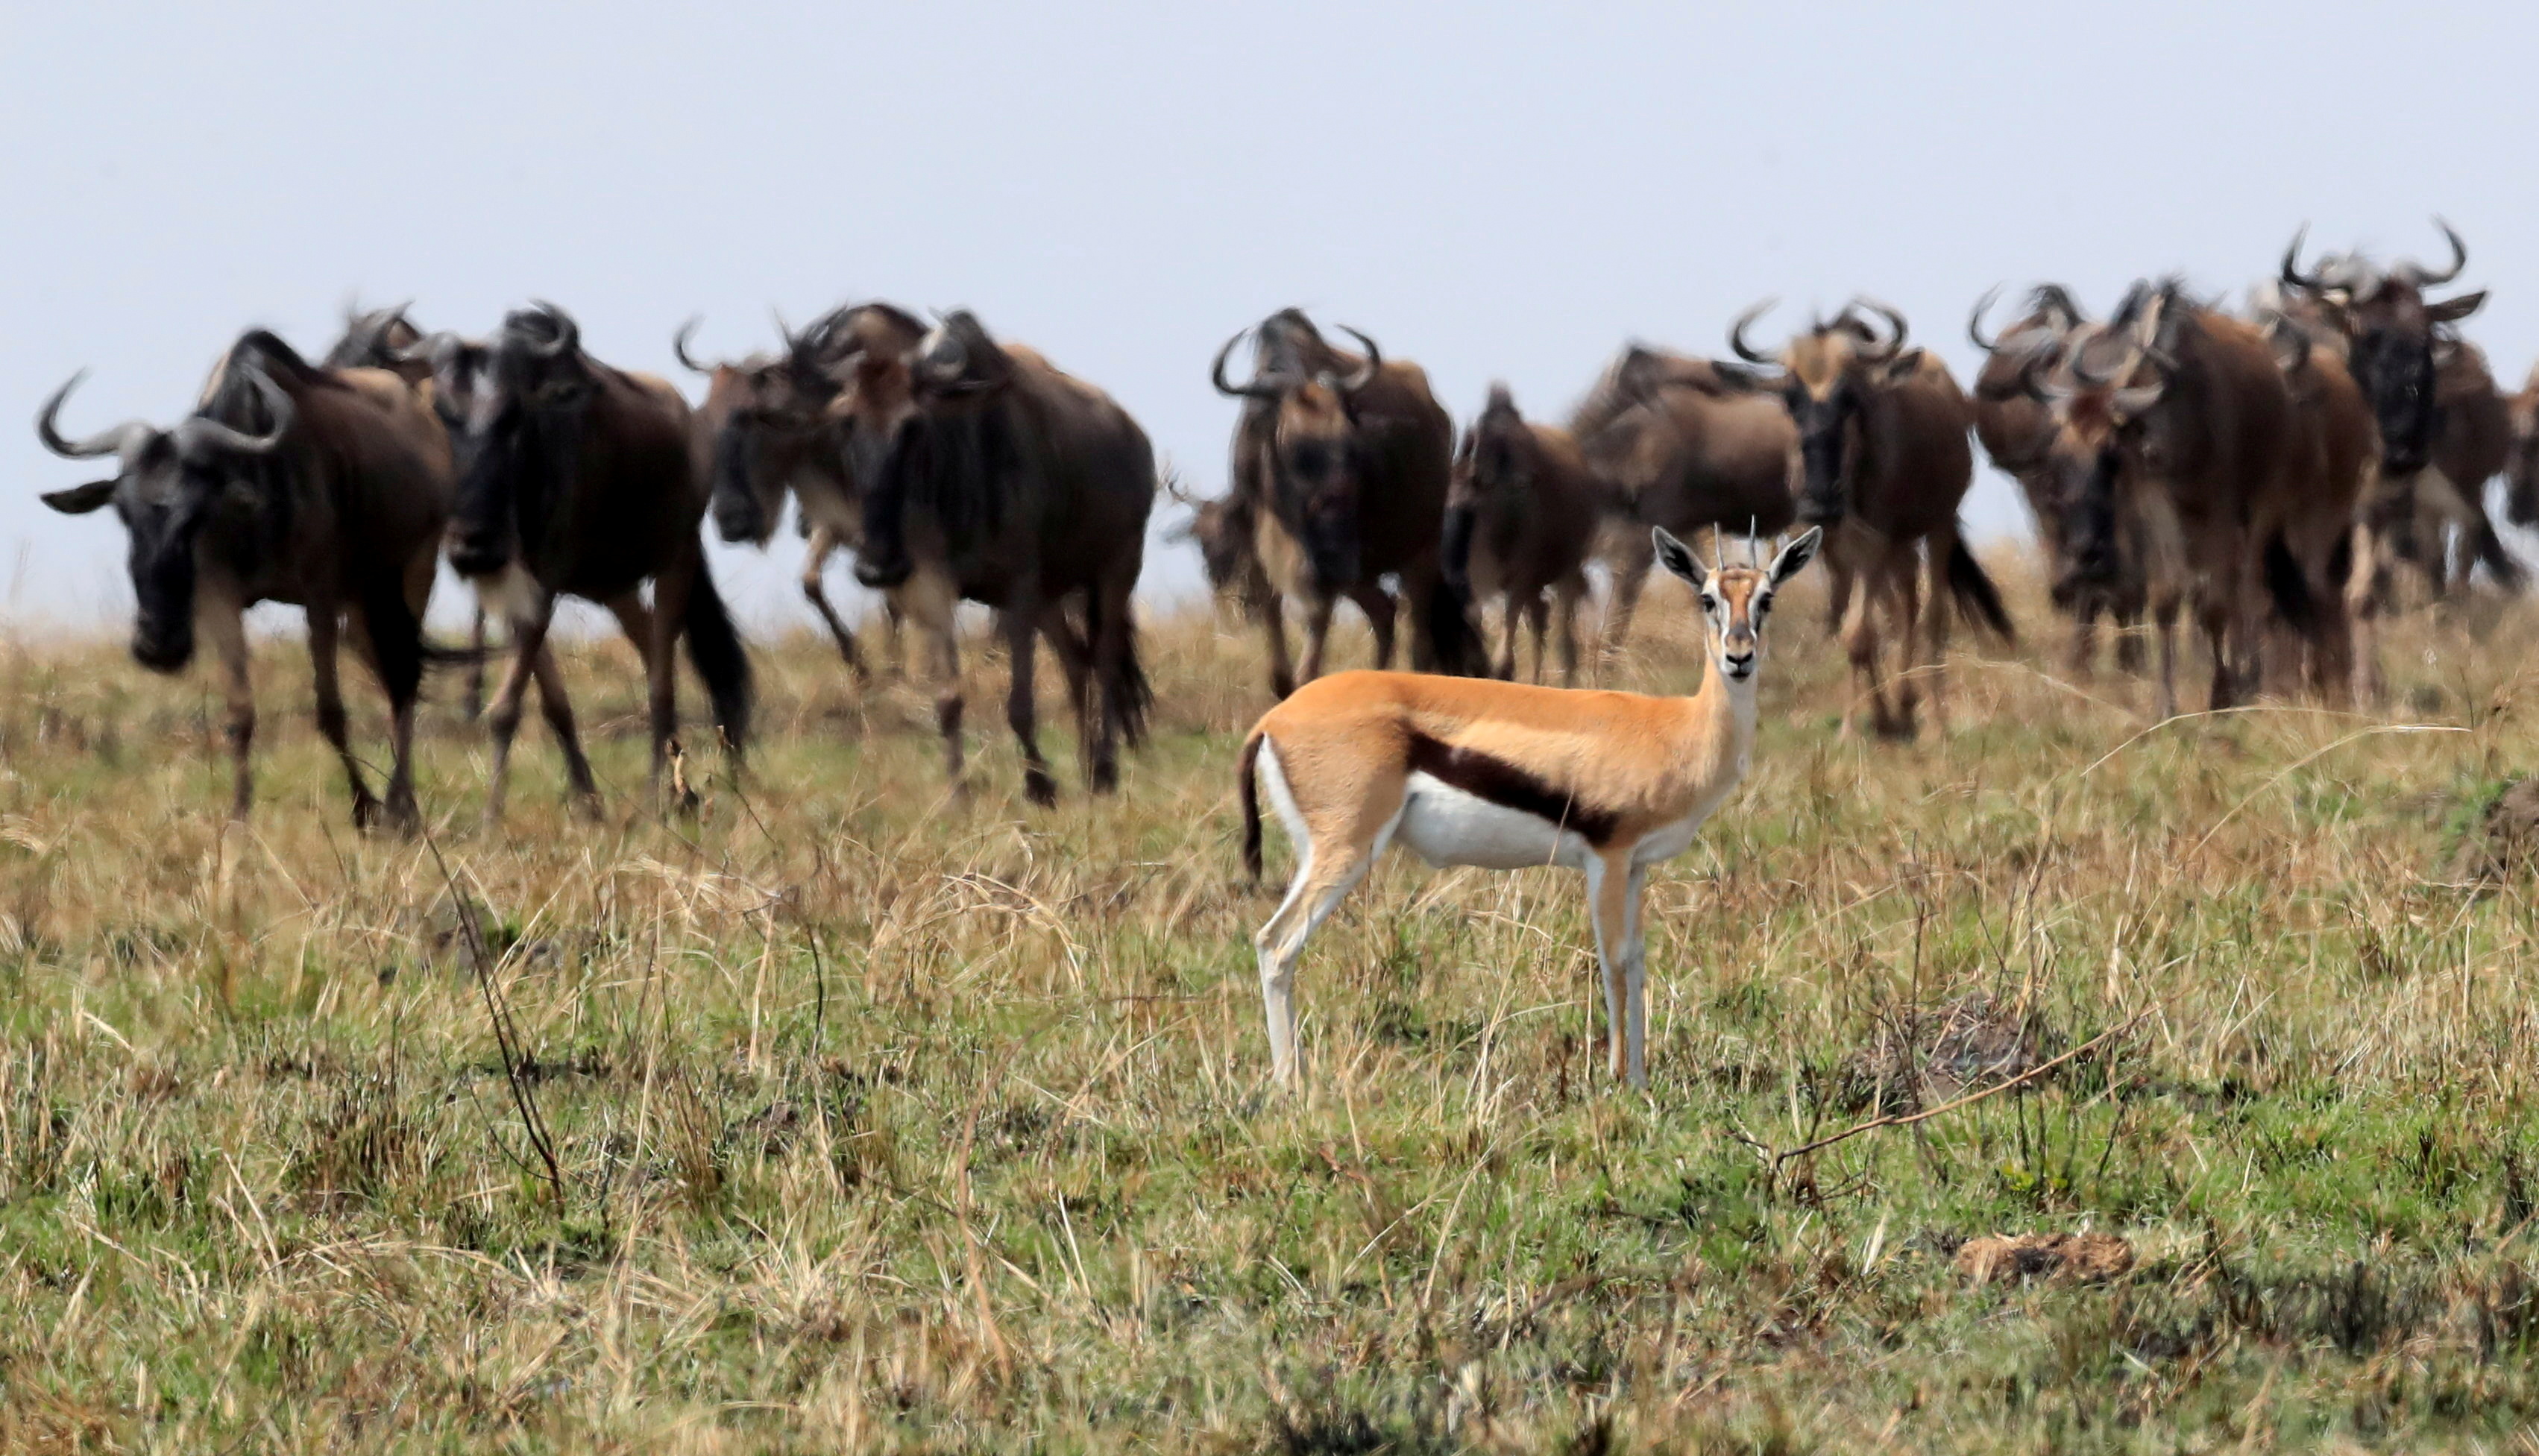 Wildebeests migrate to greener pastures, in the Maasai Mara game reserve